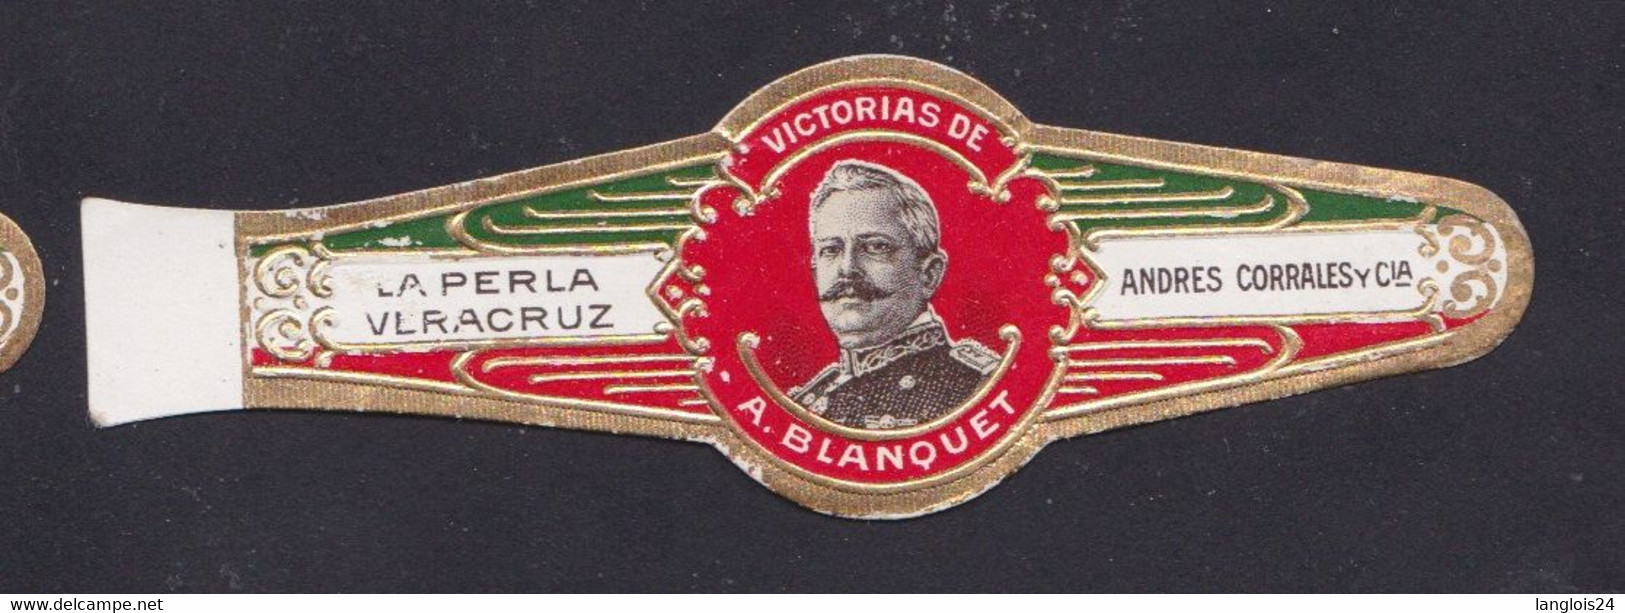 Ancienne Bague De Cigare Vitola B177 Homme Blanquet - Cigar Bands